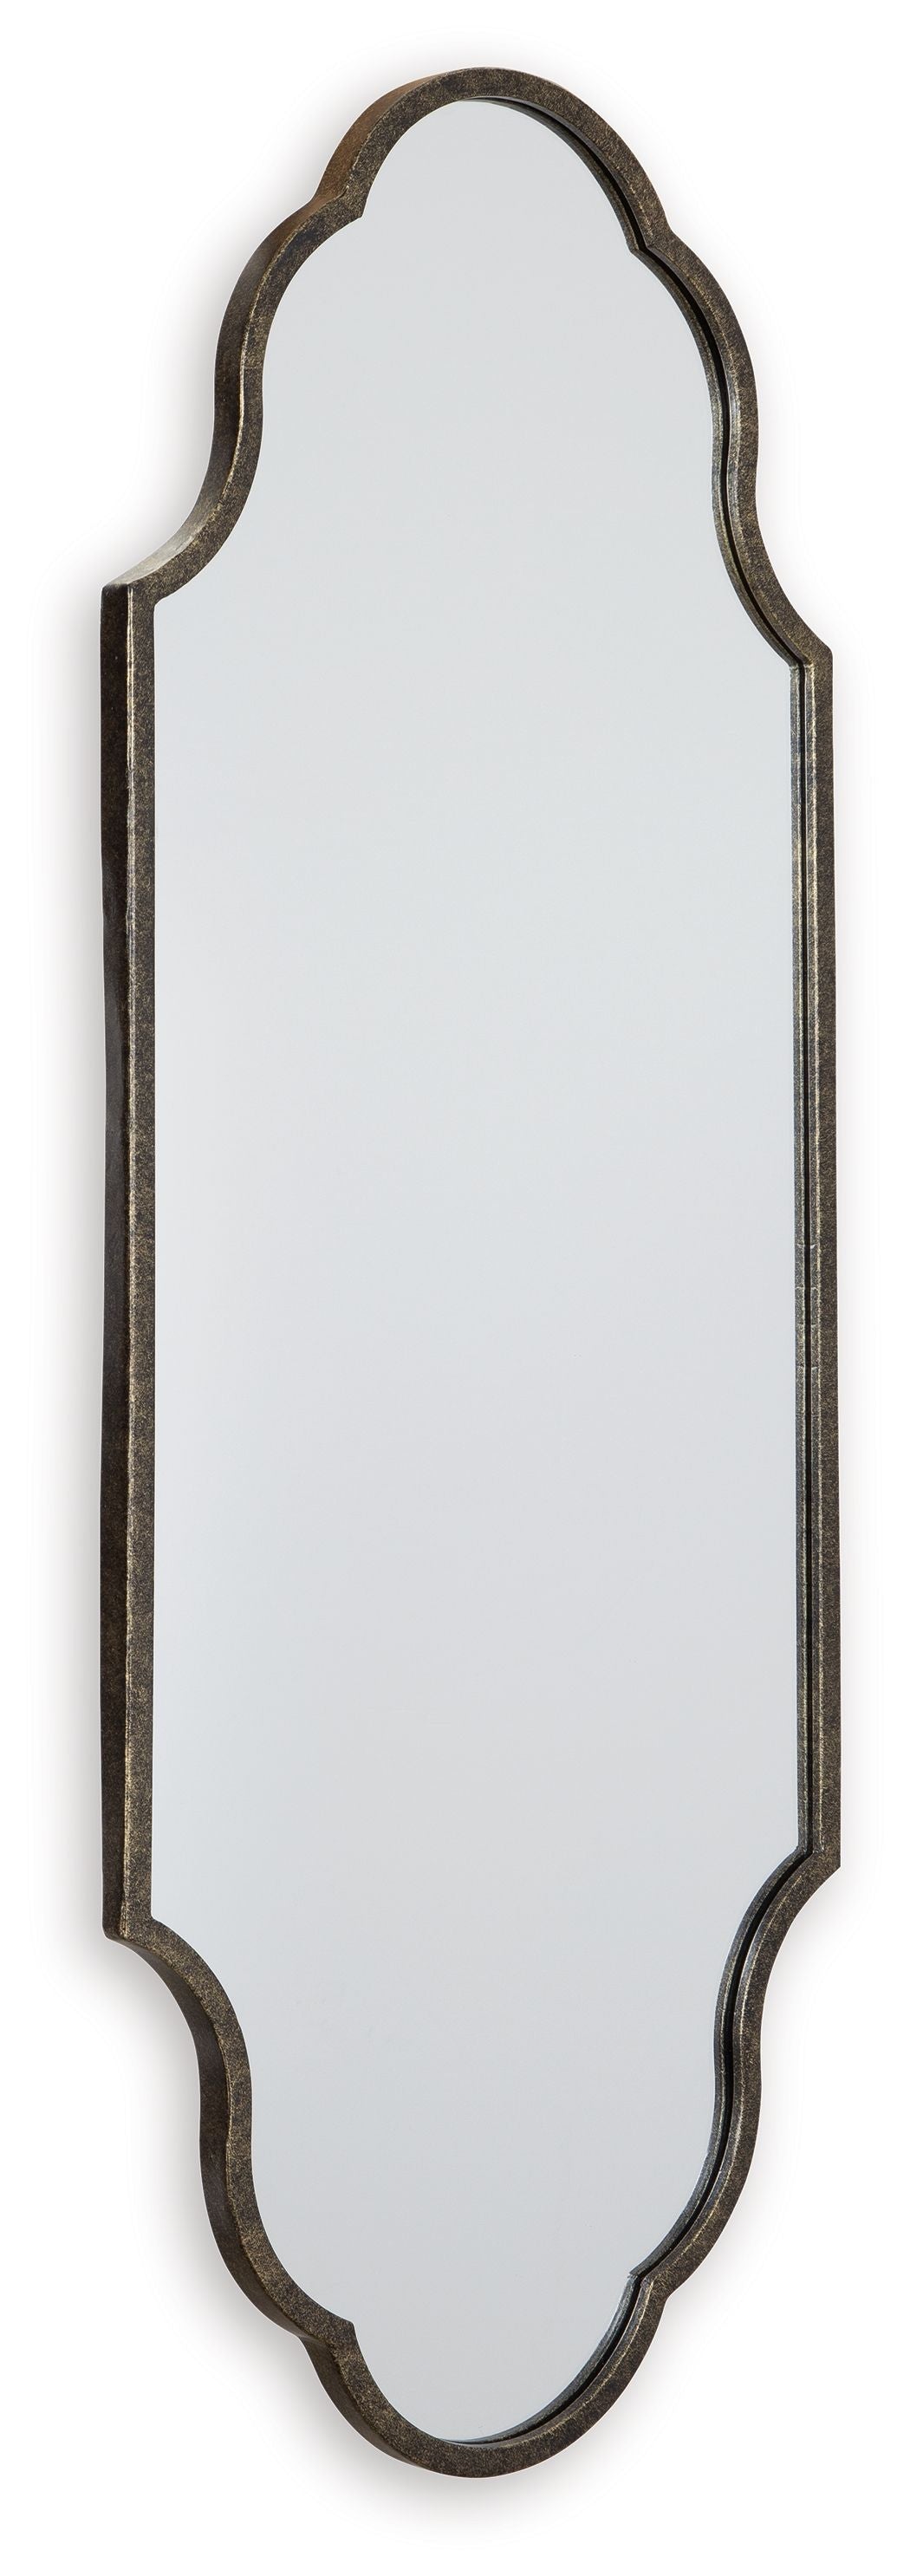 Hallgate Antique Gold Finish Accent Mirror — Price Busters Furniture